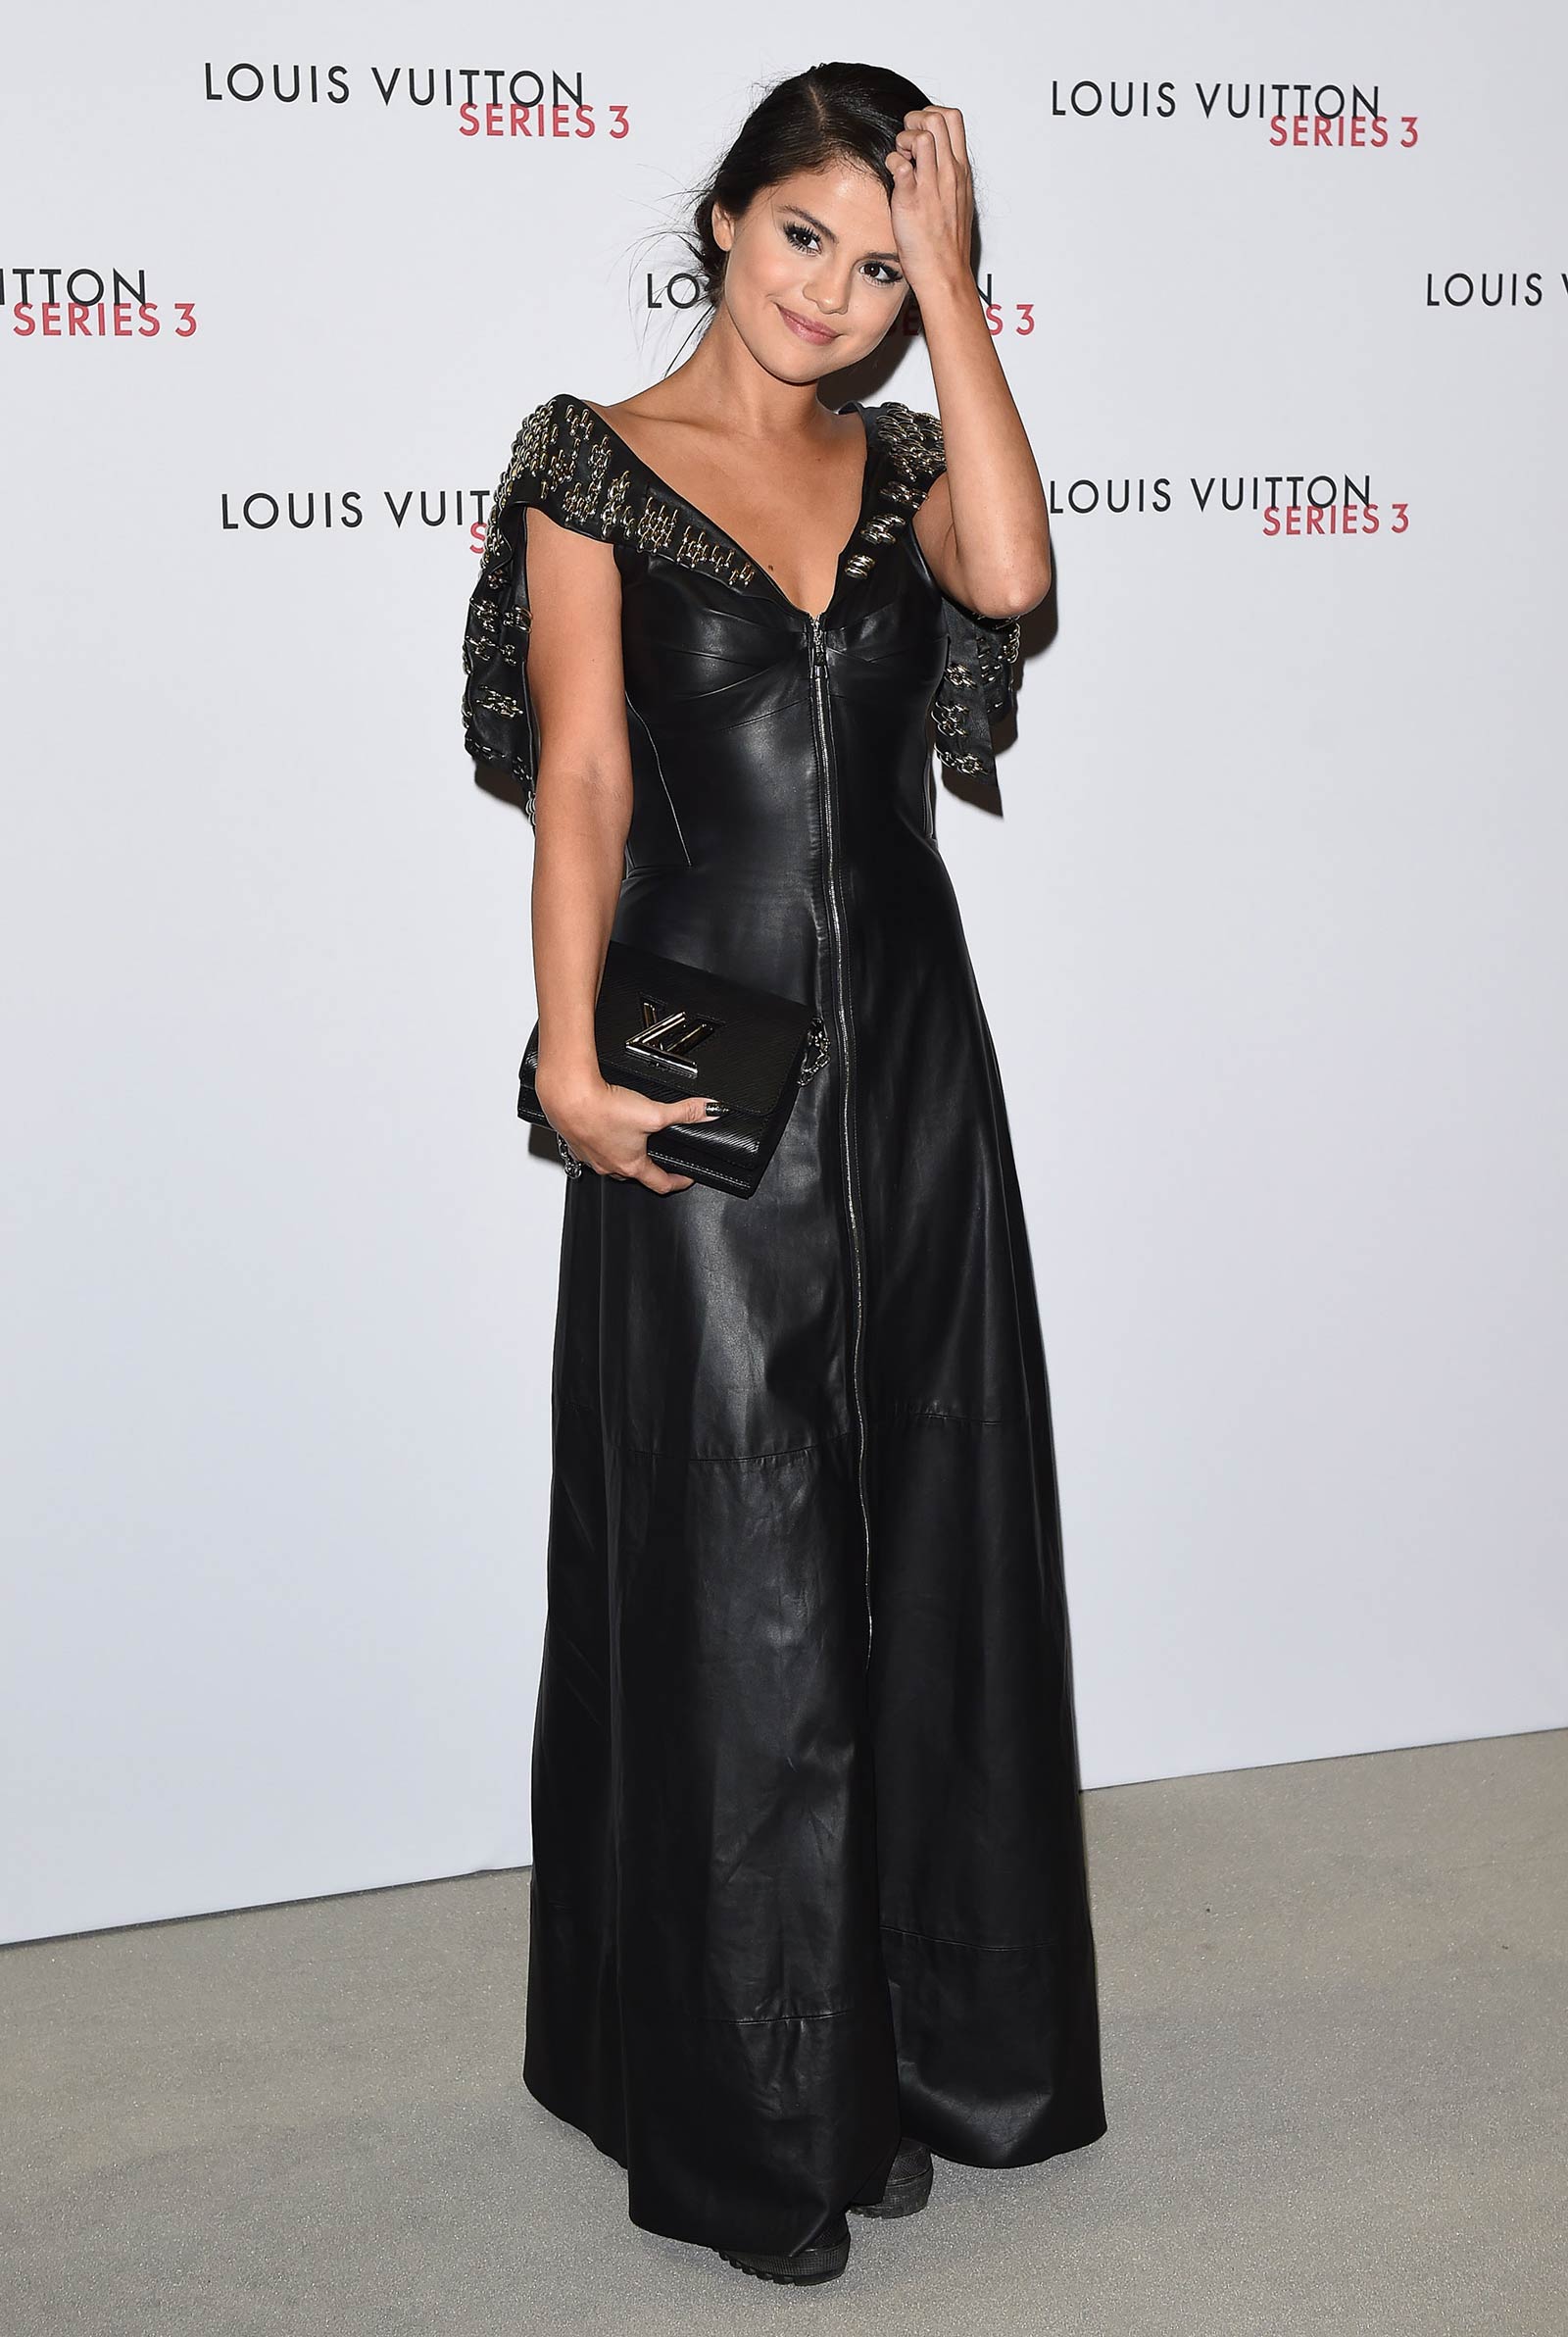 Selena Gomez attends Louis Vuitton Series 3 VIP Launch